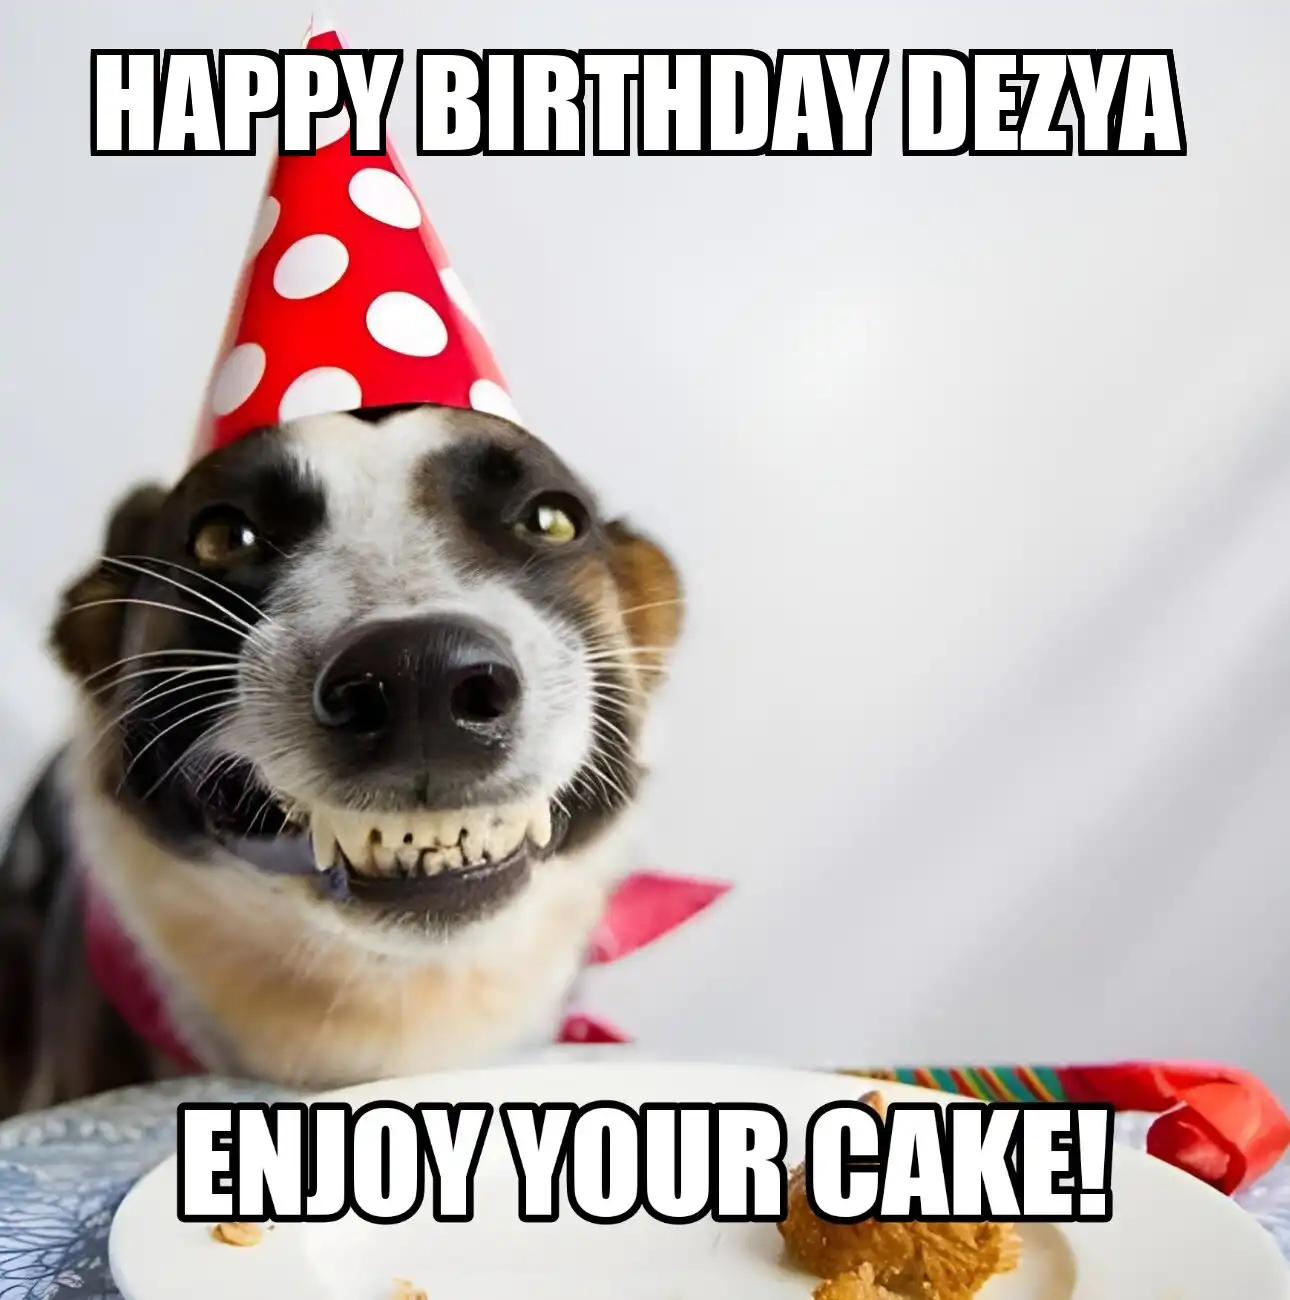 Happy Birthday Dezya Enjoy Your Cake Dog Meme